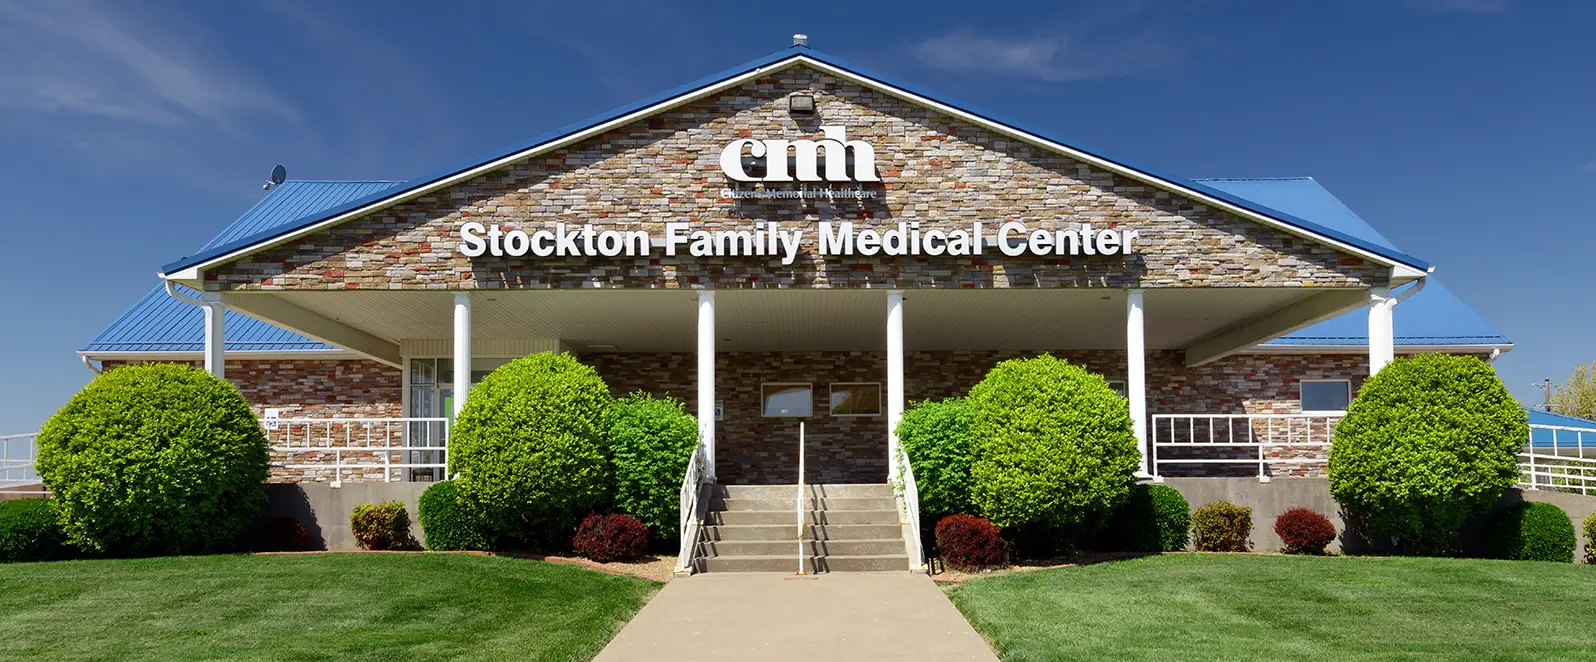 Stockton Family Medical Center building exterior